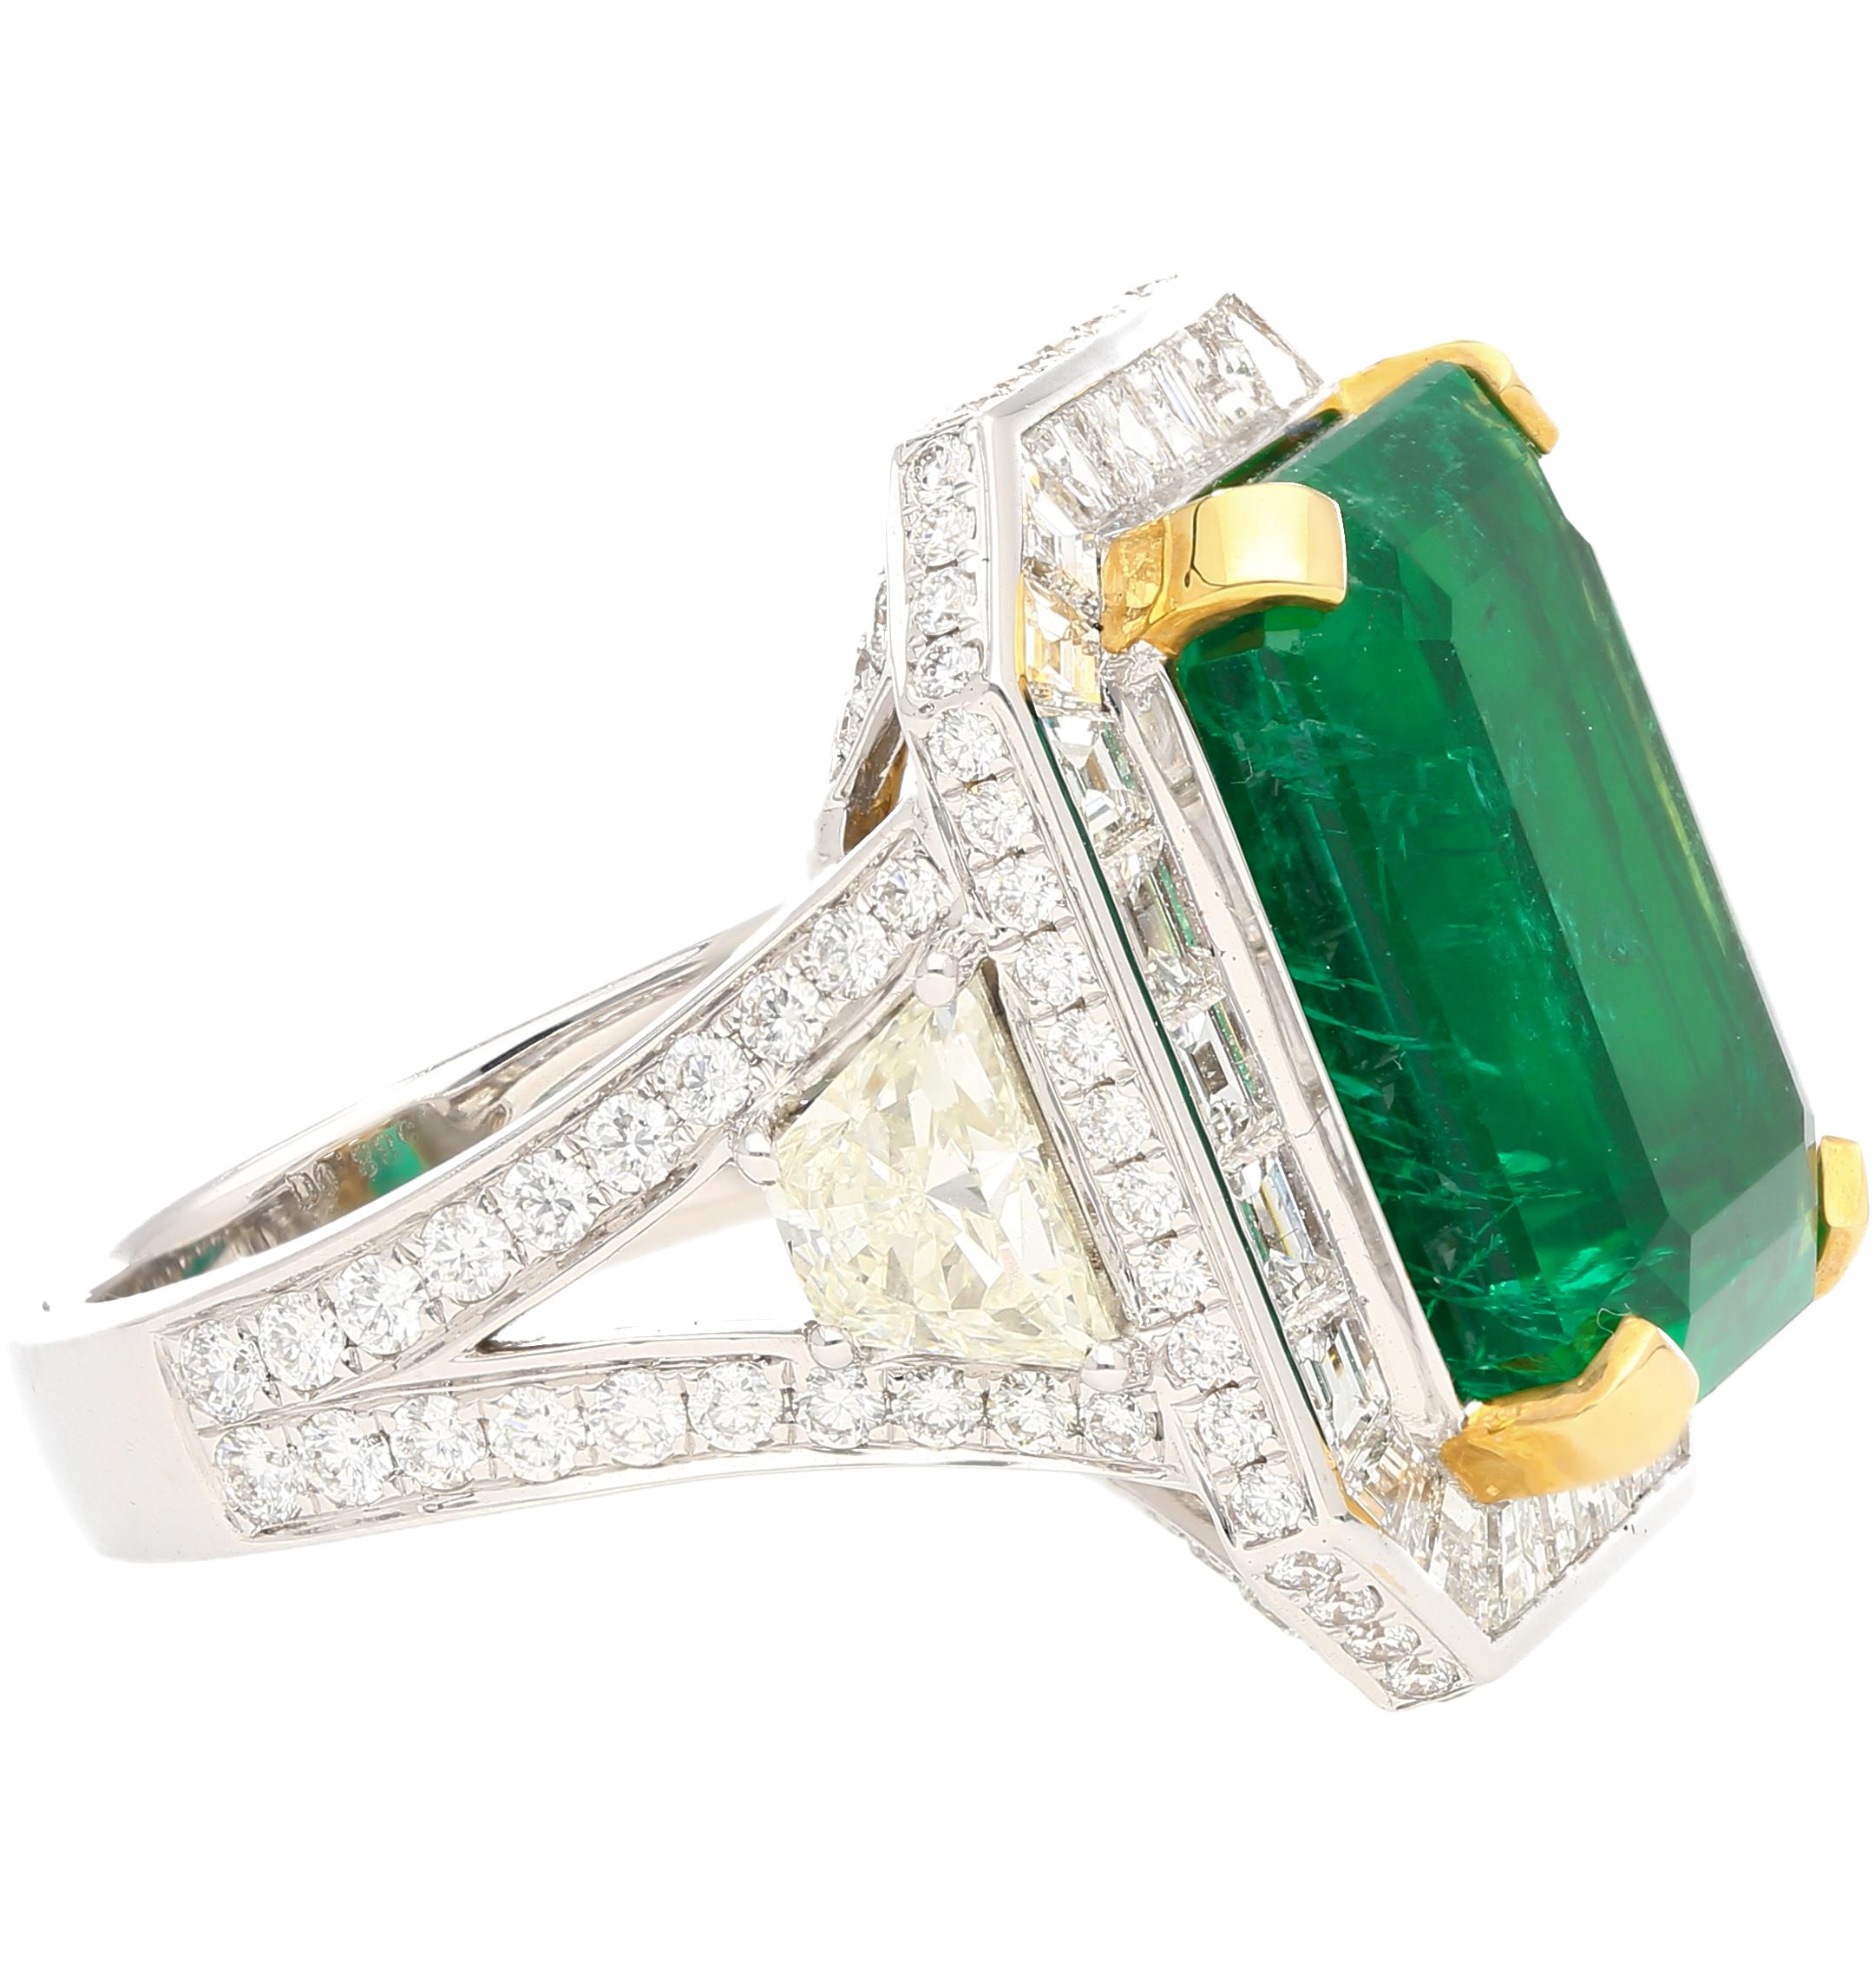 Emerald Cut AGL Certified 15.78 Carat No Oil Brazil Emerald & Diamond Ring in 18K Gold For Sale